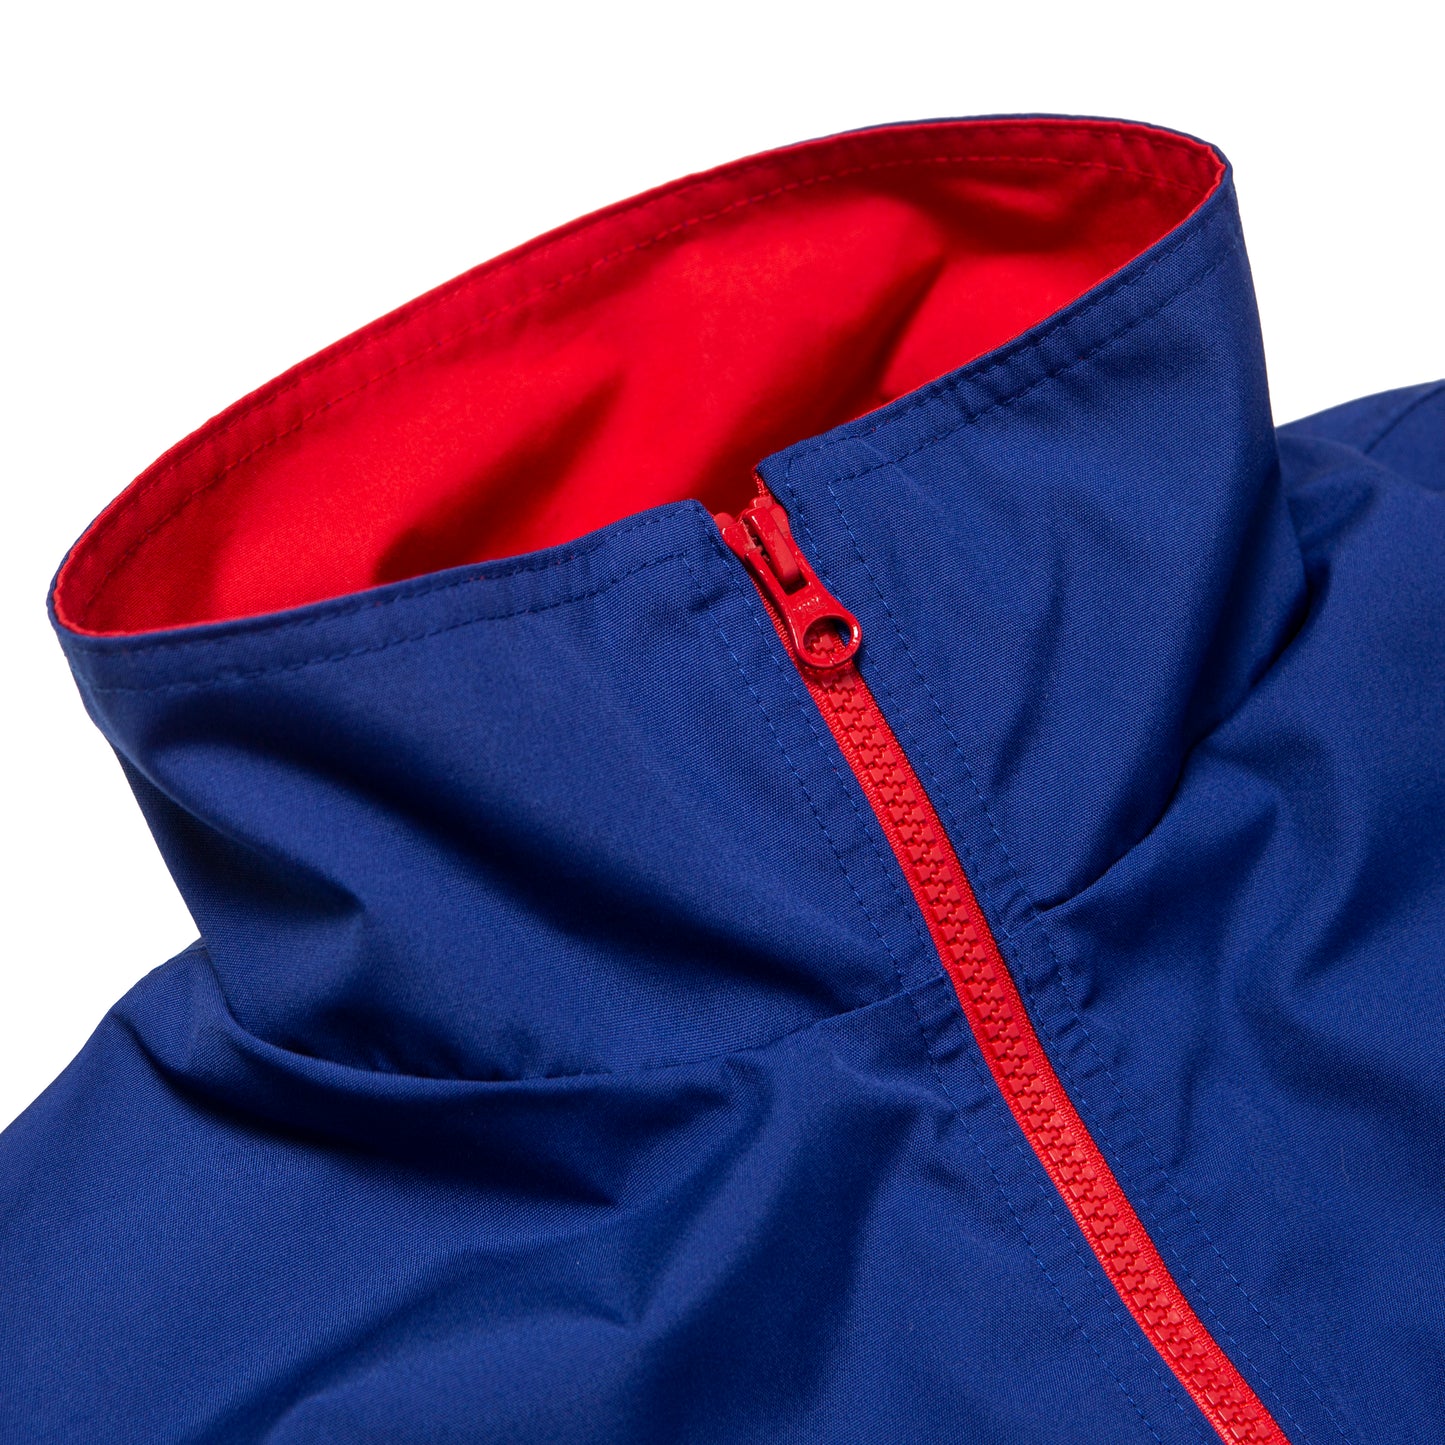 Gemini Zipper Jacket Blue/Red